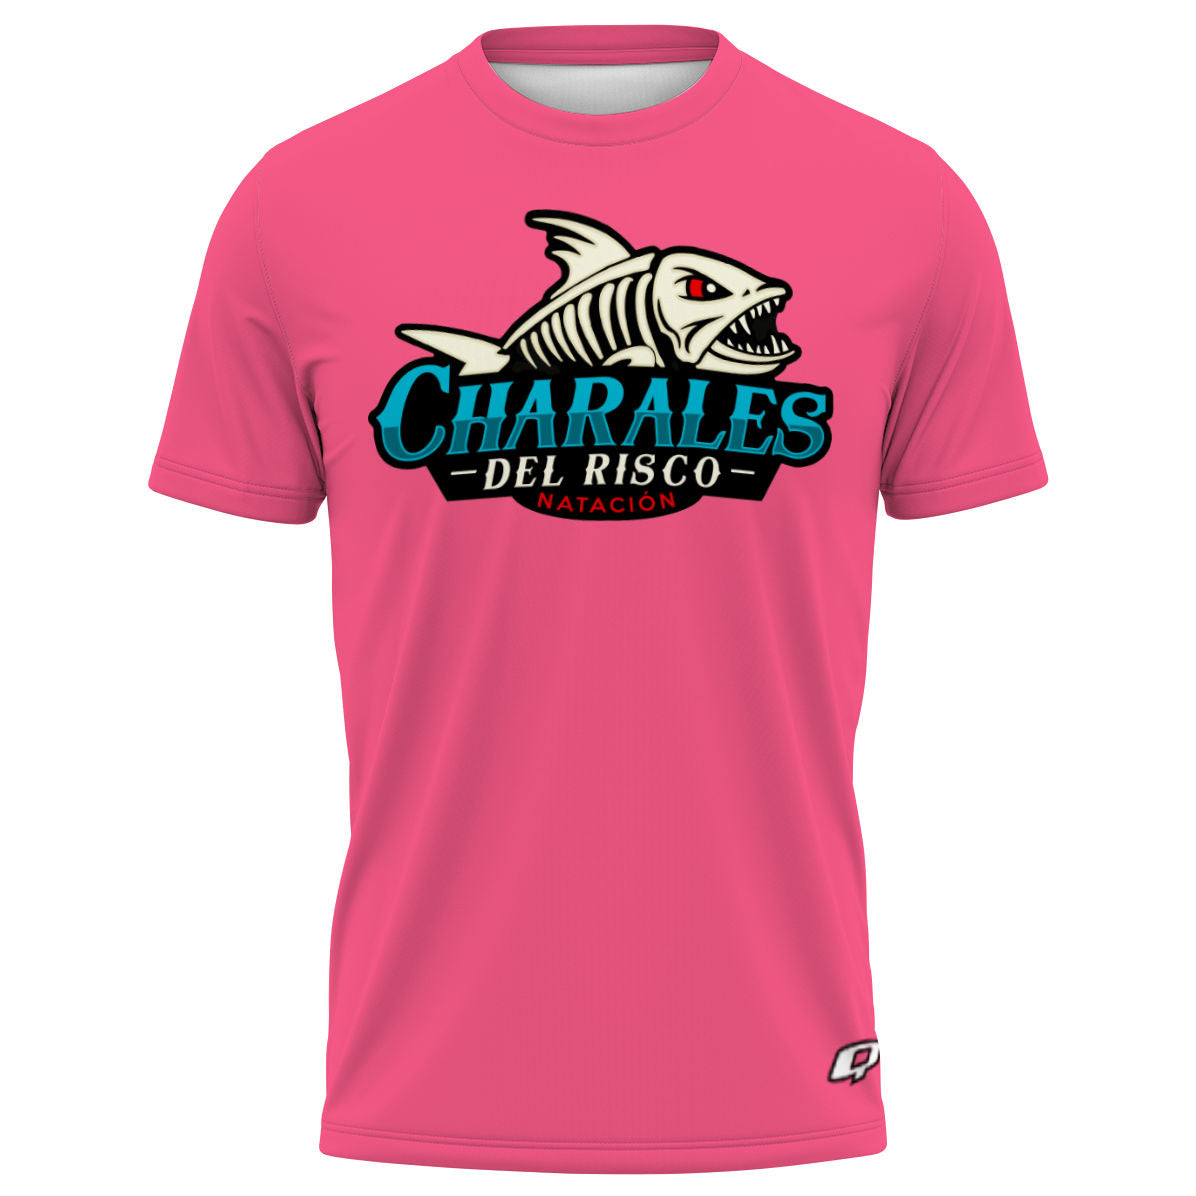 Charales - Performance Shirt